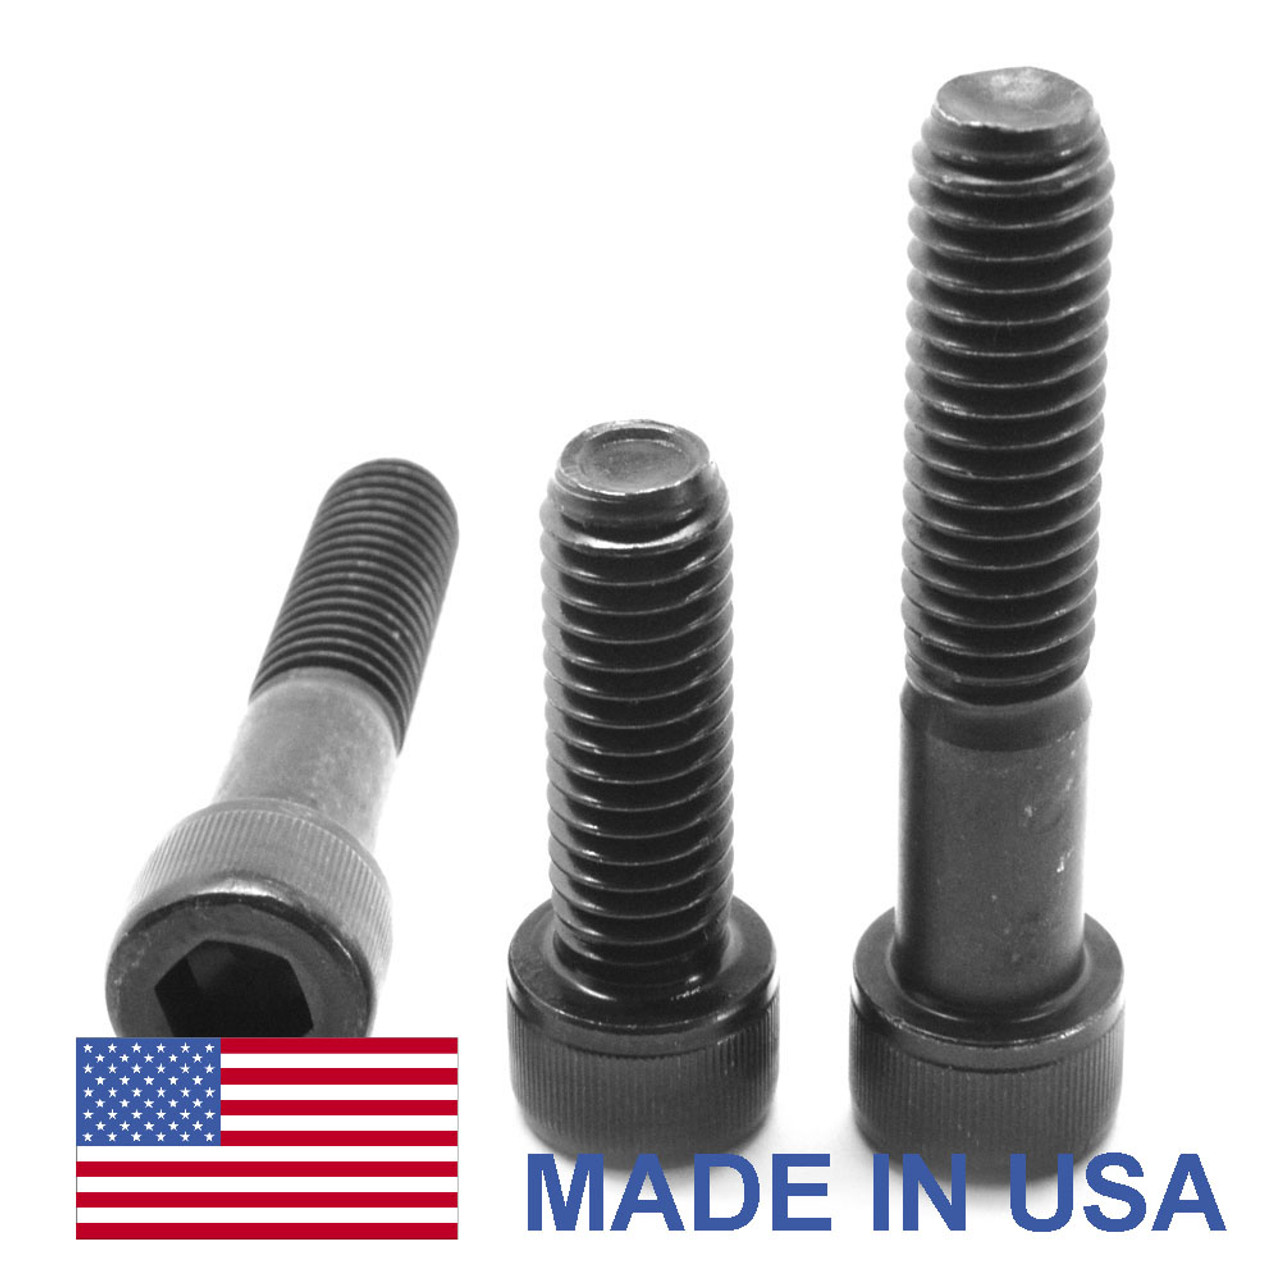 7/16-14 x 4 Coarse Thread Socket Head Cap Screw - USA Alloy Steel Black Oxide